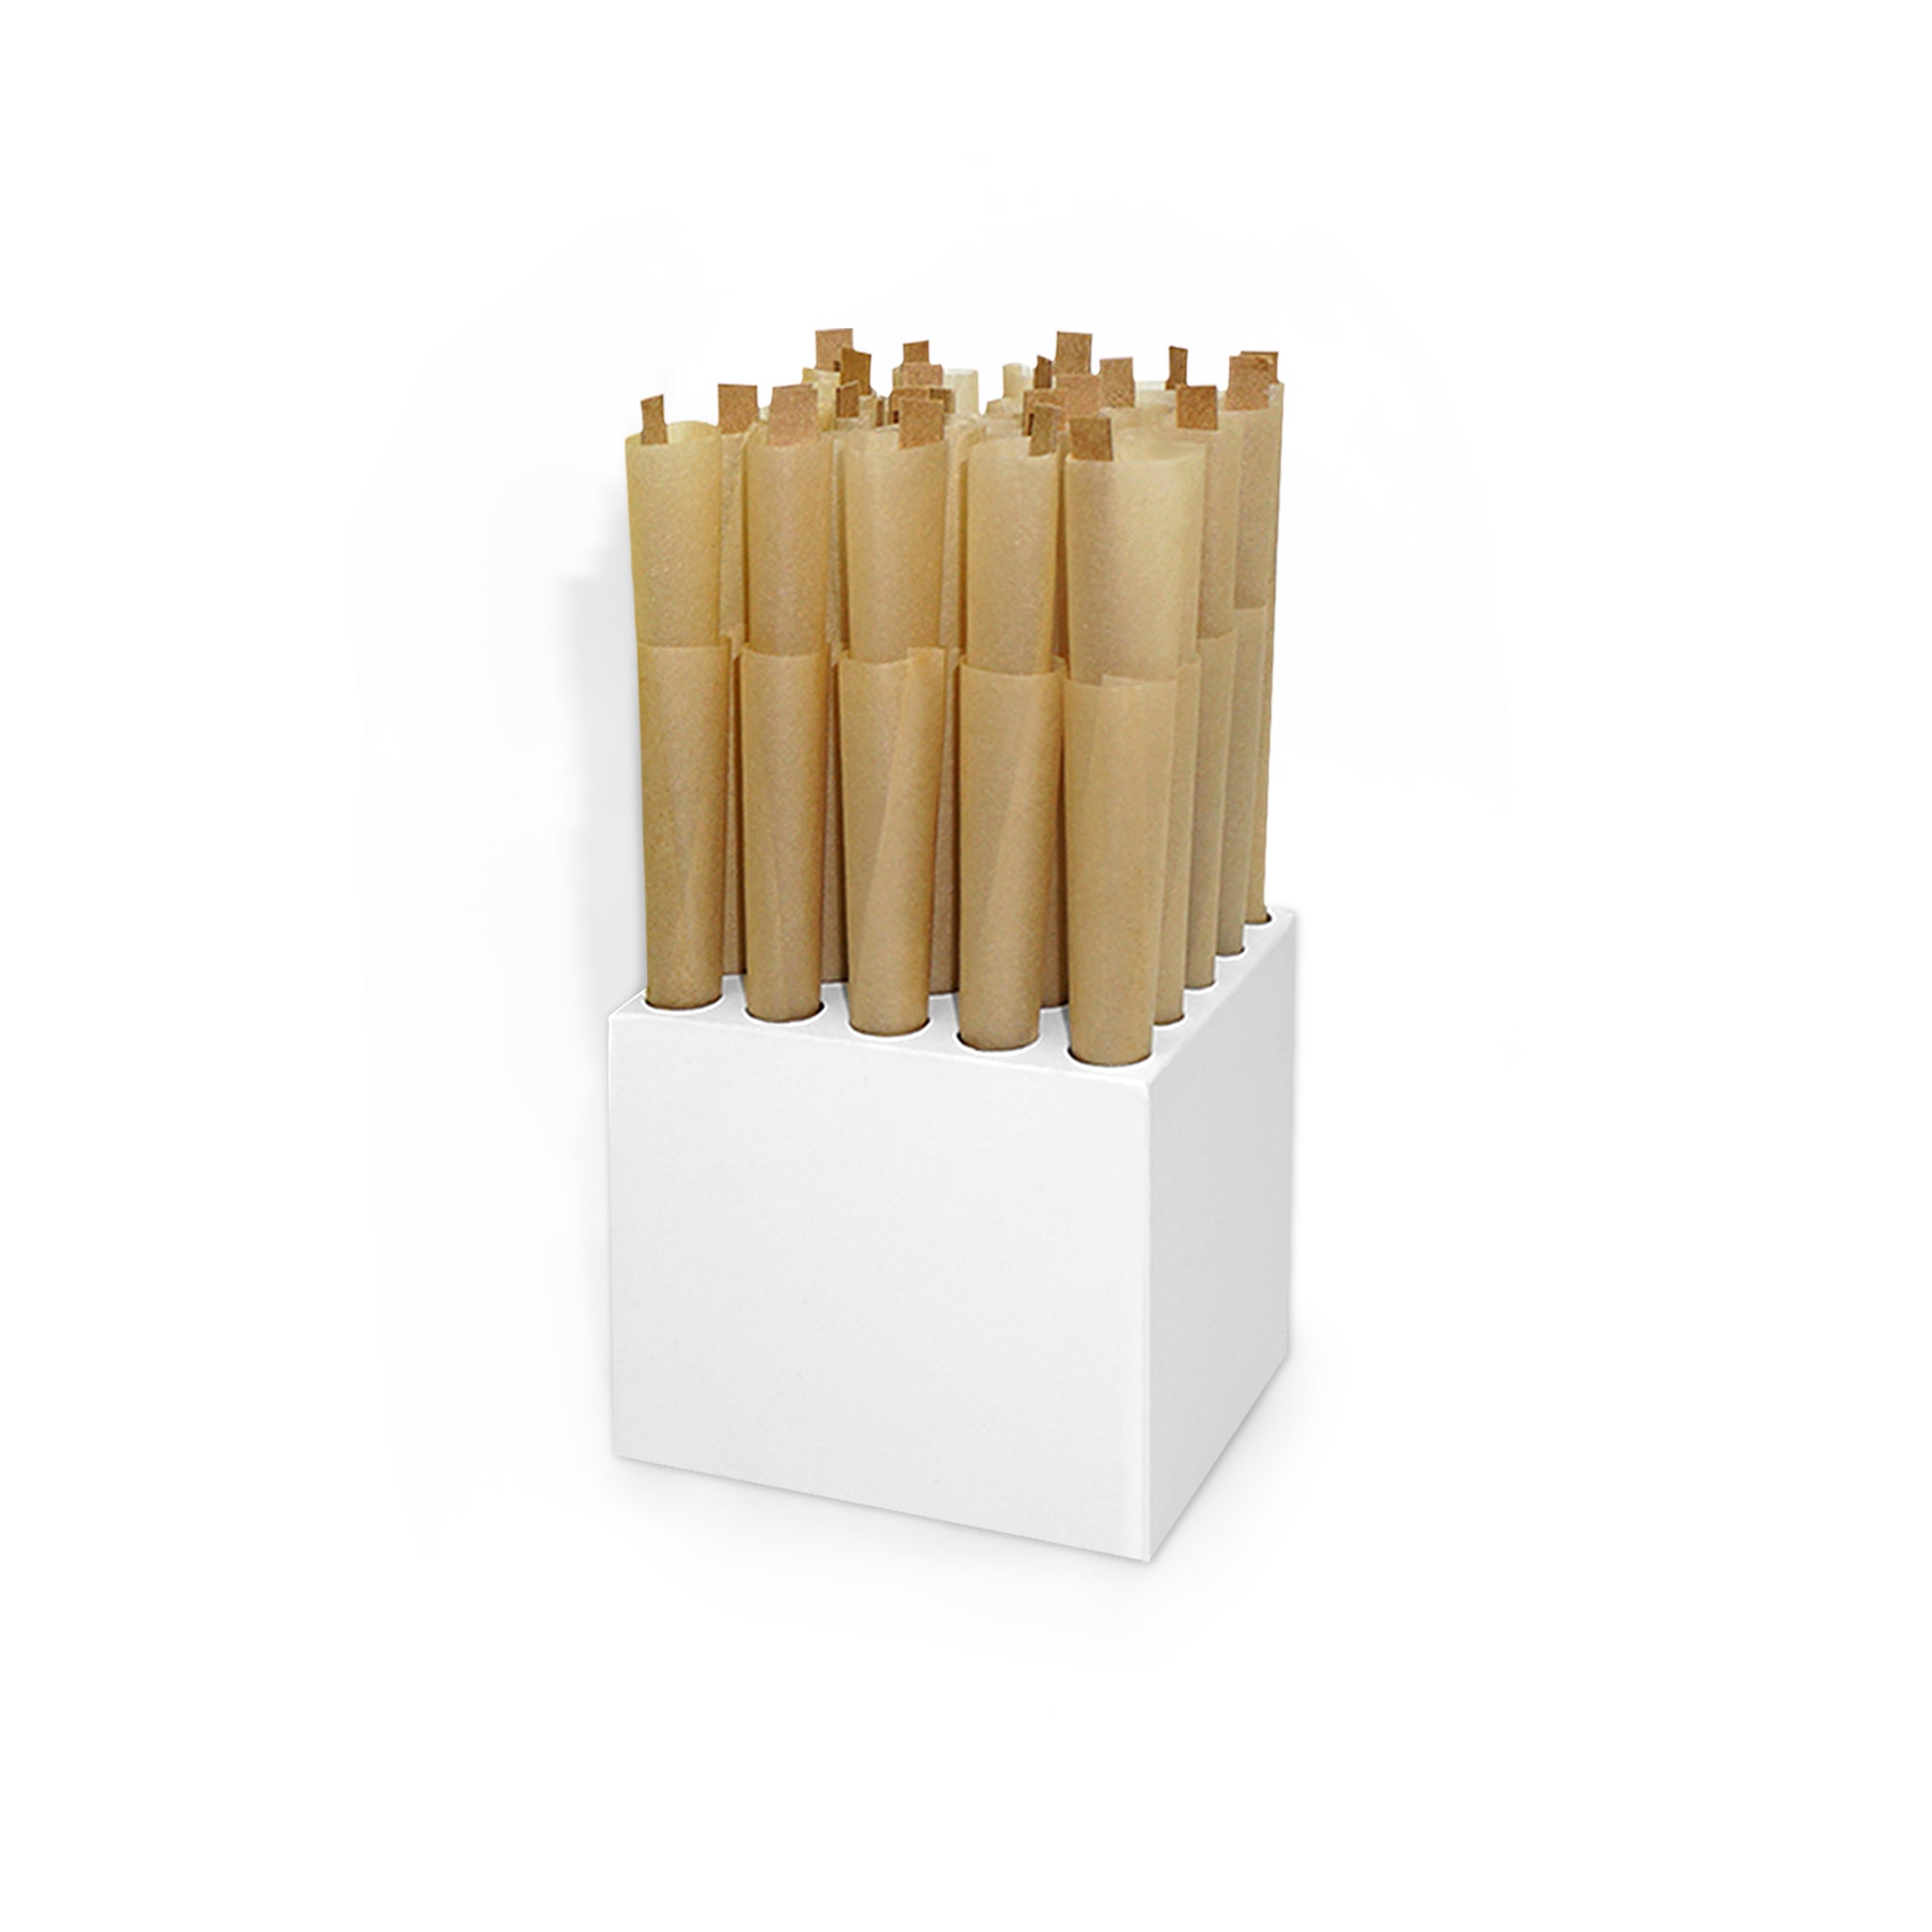 Custom Pre Rolled Cones in Tower Box Packaging (50CT)